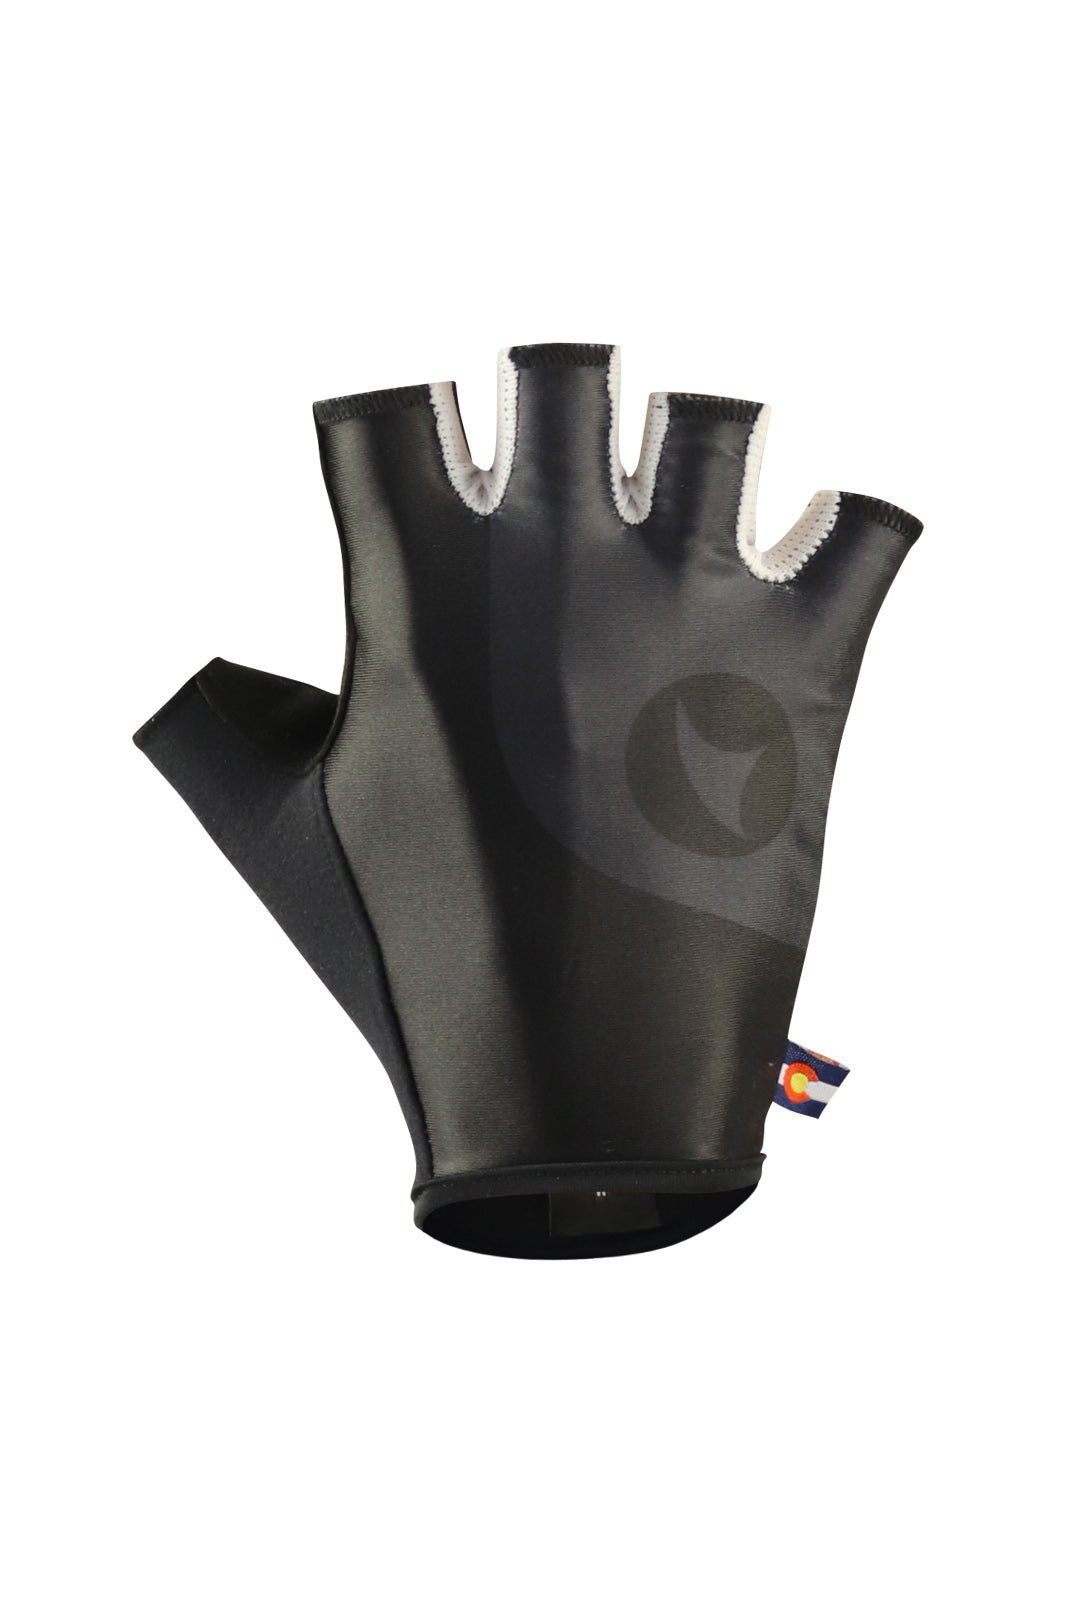 Black Bike Gloves